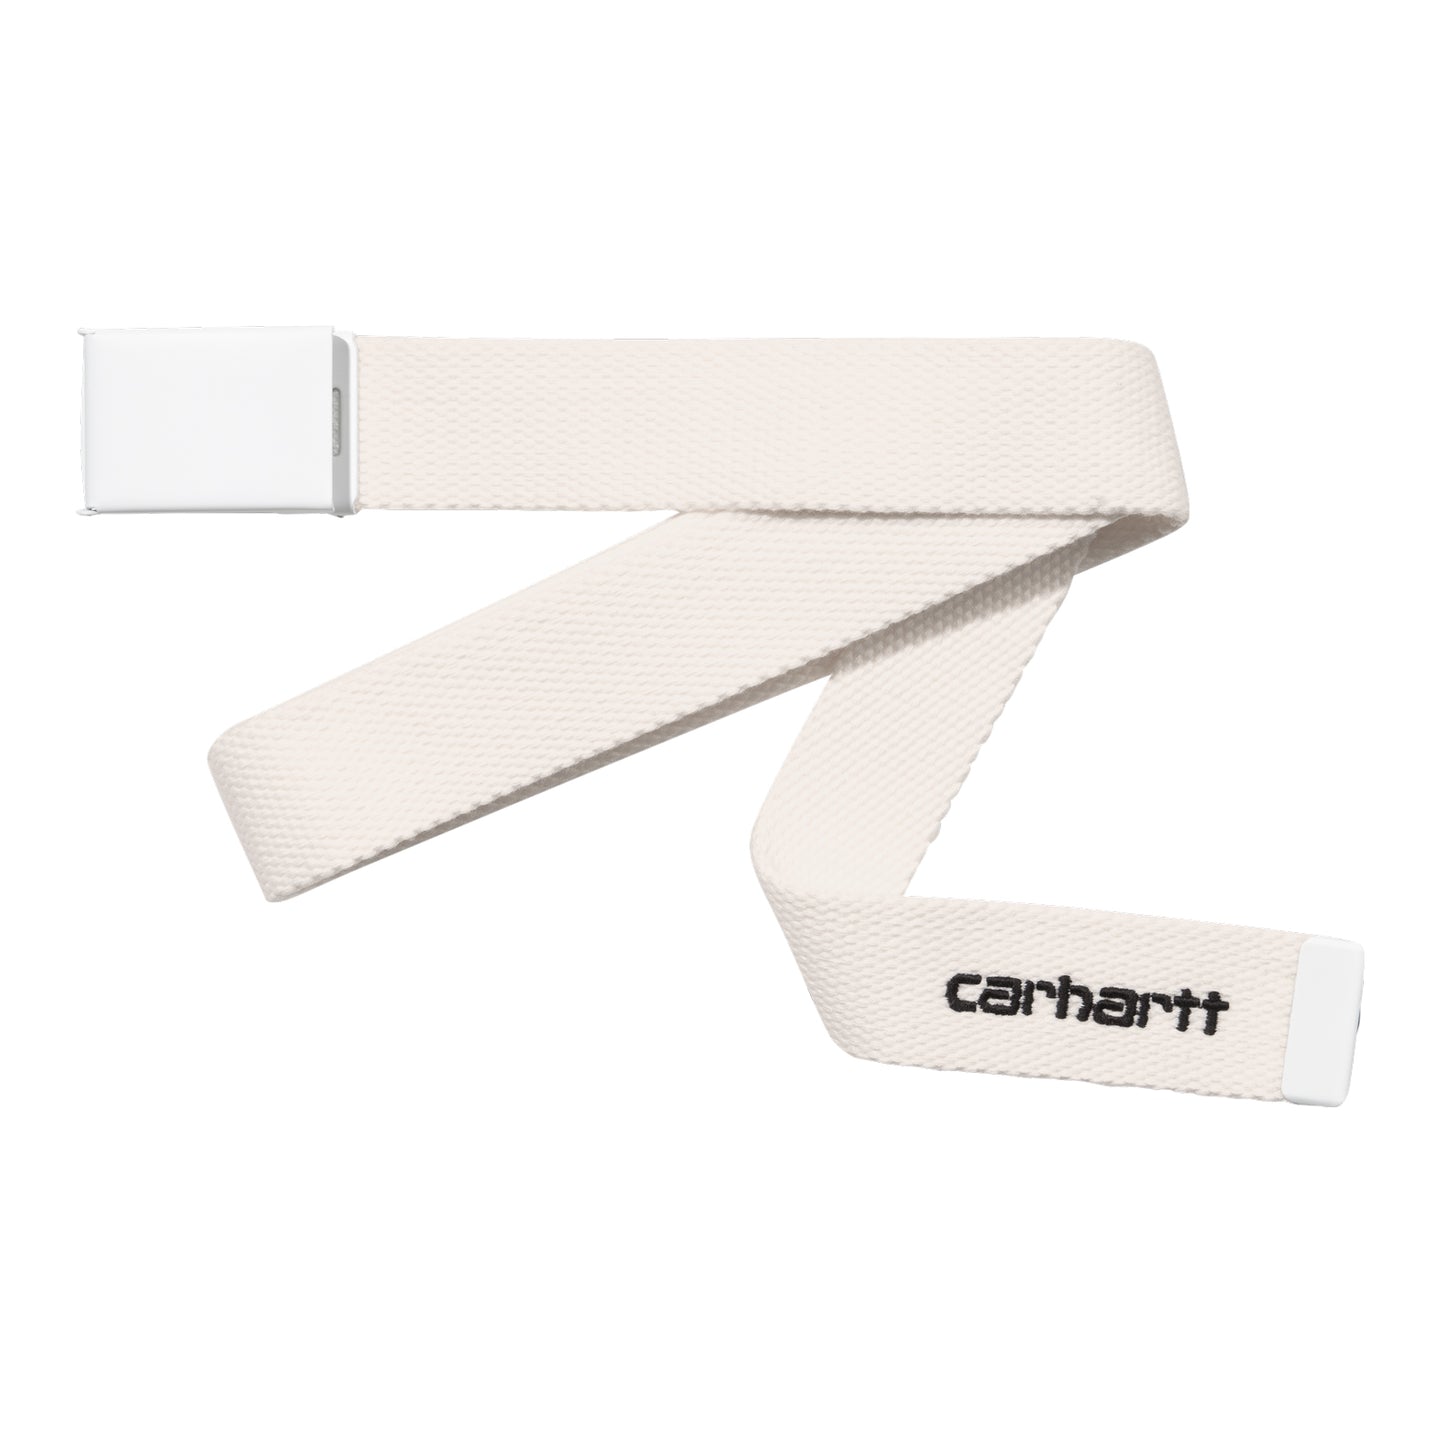 Carhartt WIP Script Belt Tonal Wax/Black. Foto do cinto.